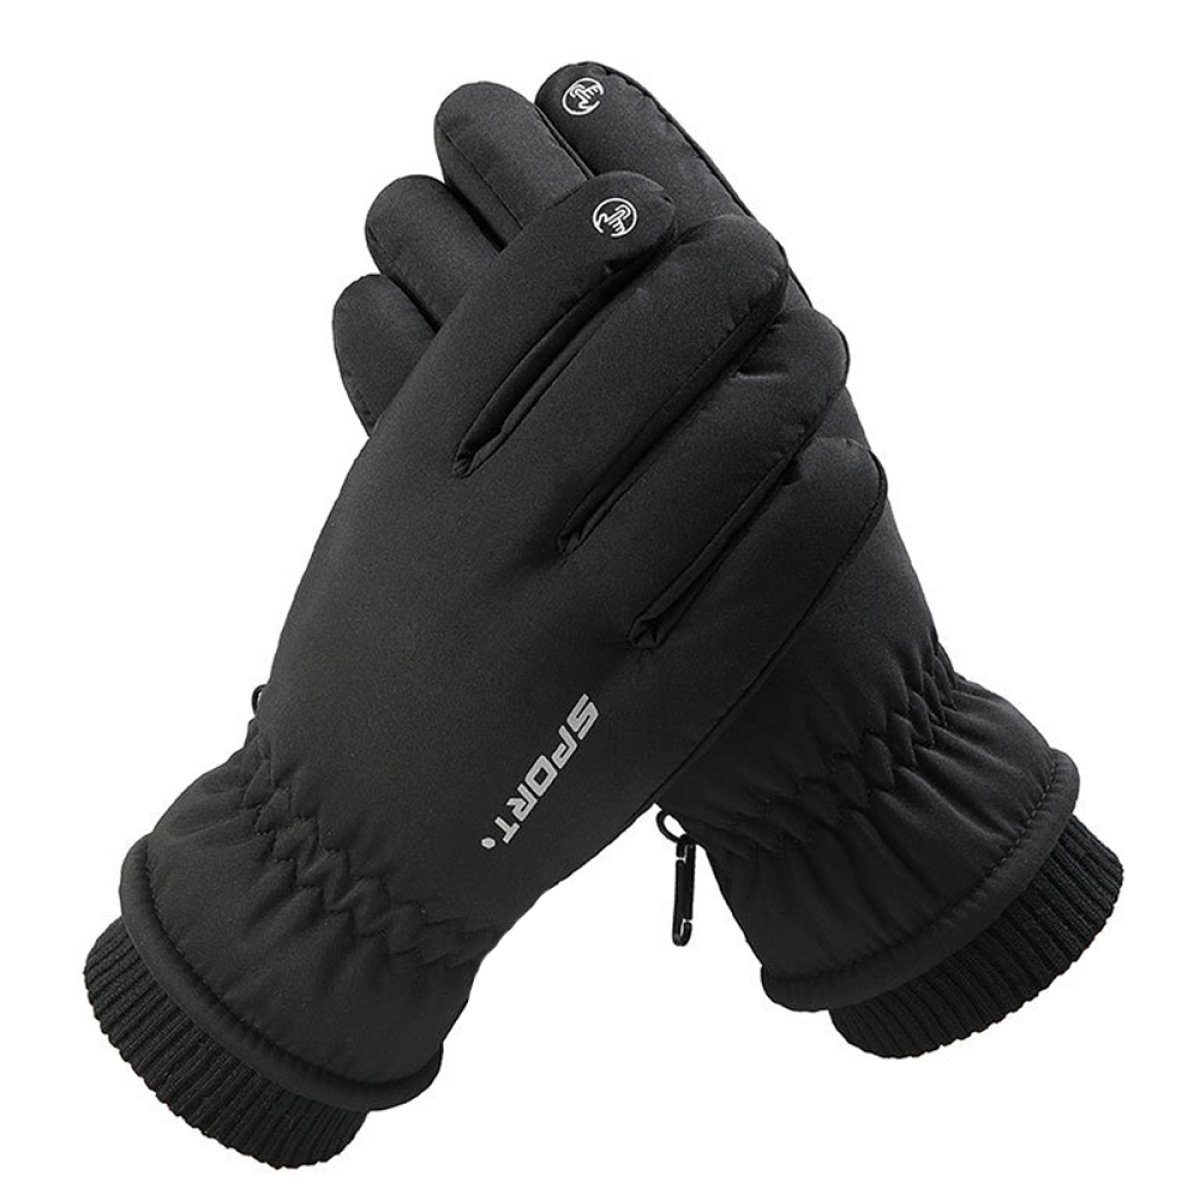 ZmdecQna Skihandschuhe Warme Winterhandschuhe Herren Damen Touchscreen Handschuhe Wasserdicht schwarz